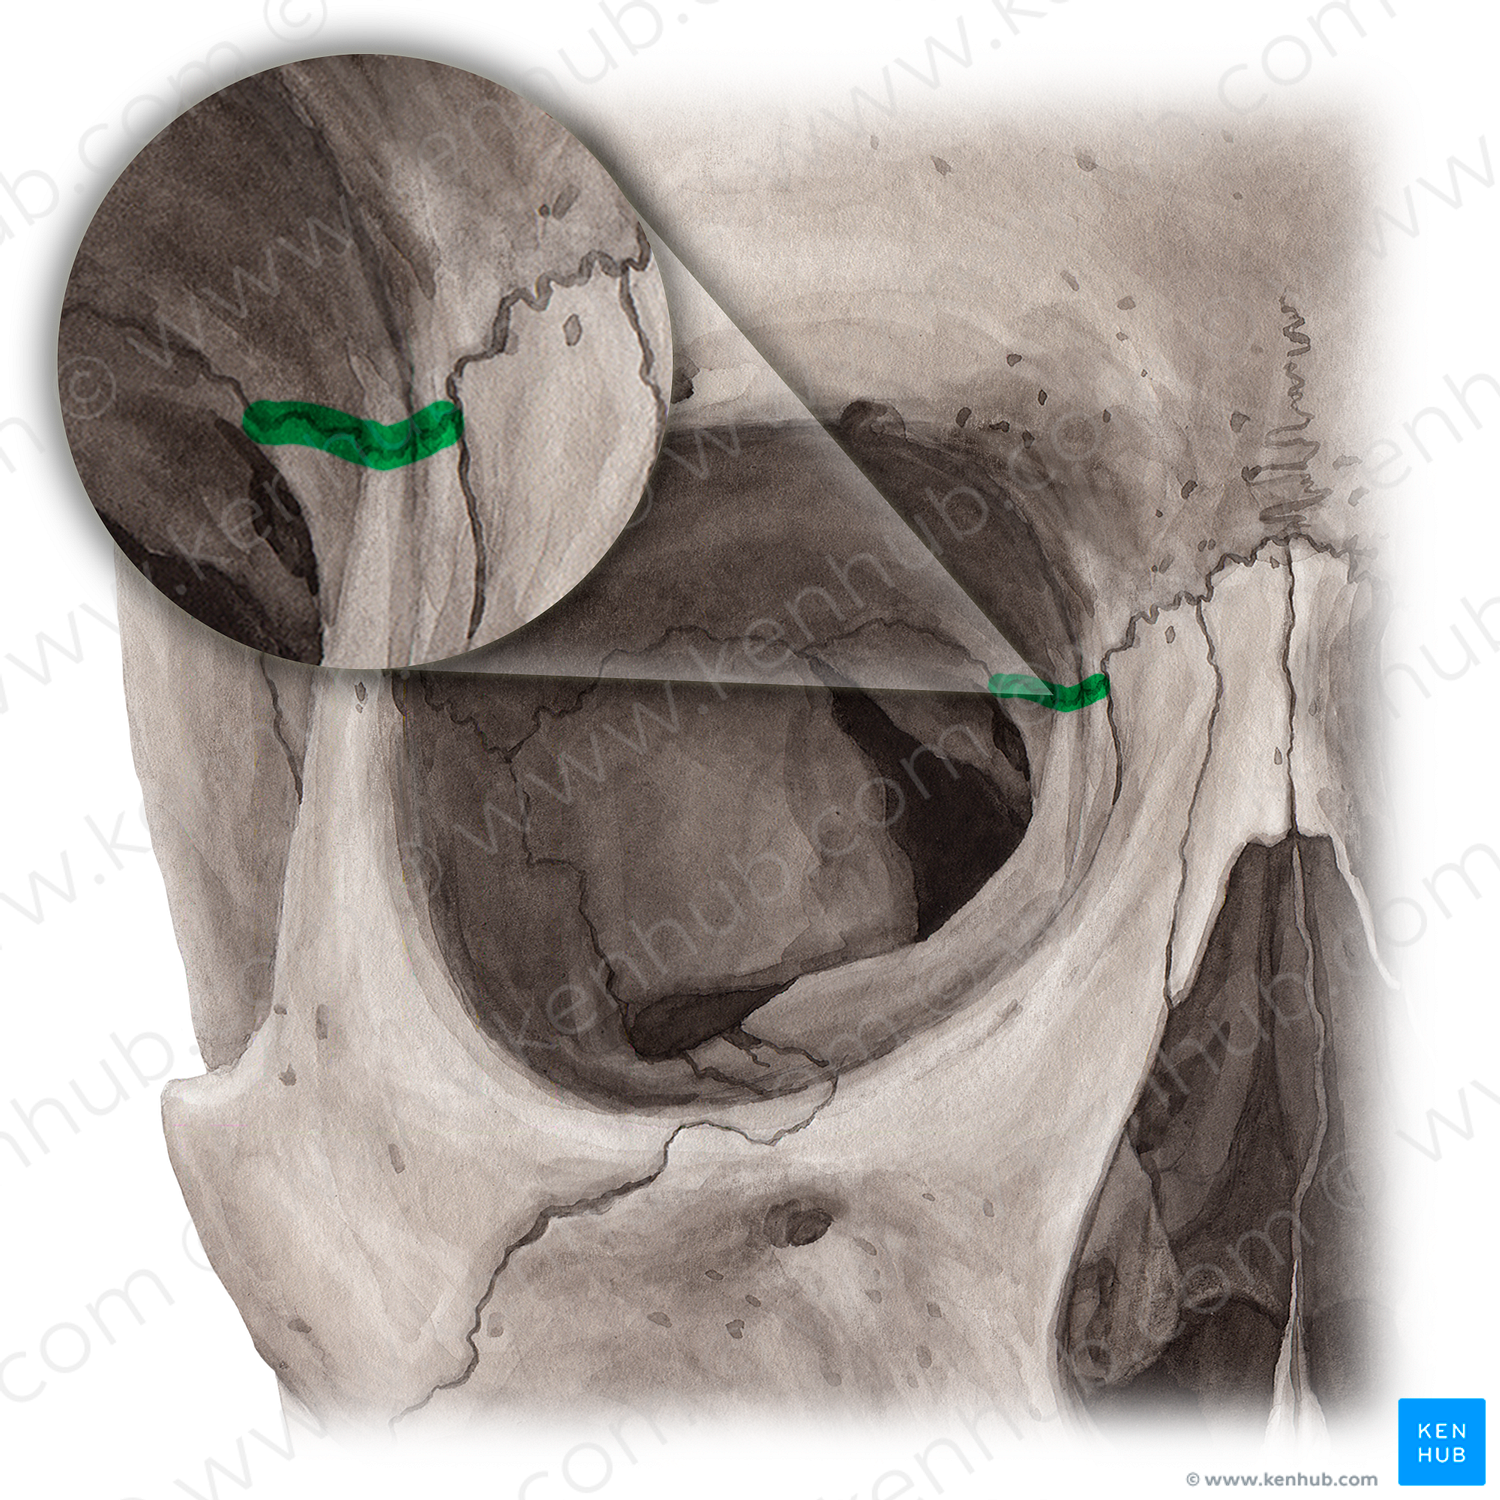 Frontoethmoidal suture (#21460)